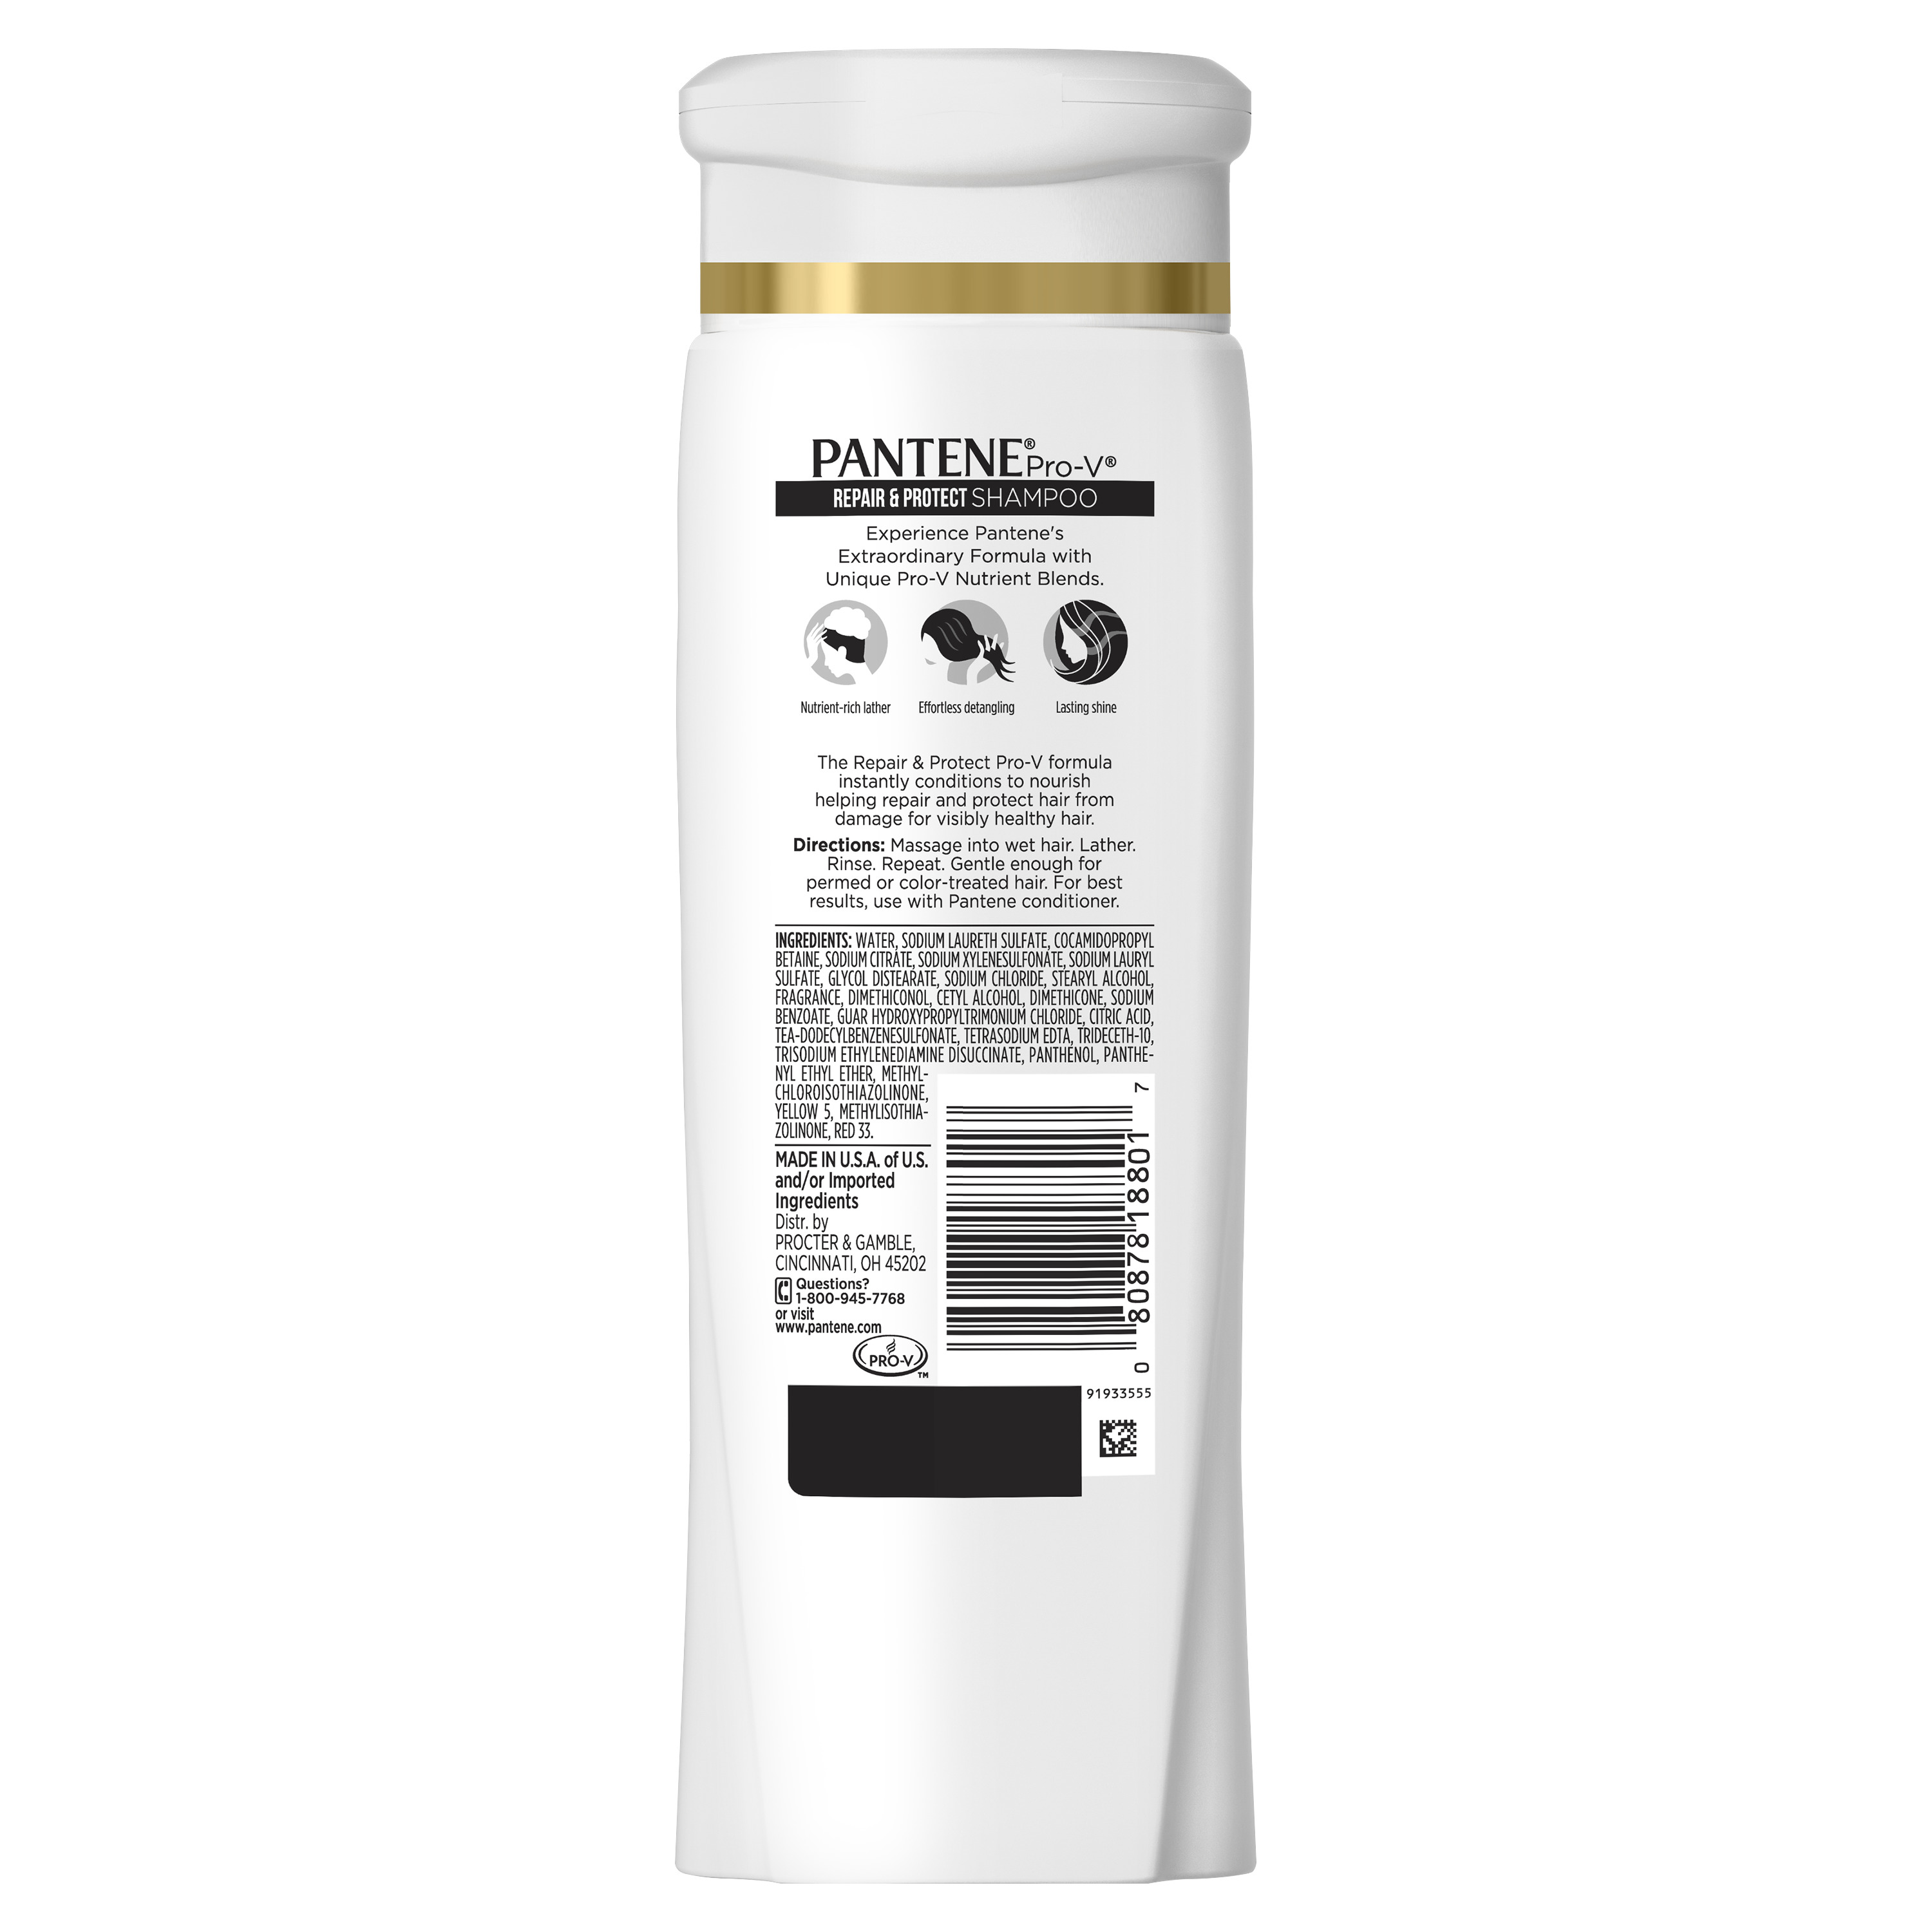 Pantene Pro-V Repair and Protect Repairing Detangling Daily Shampoo, 11 fl oz - image 2 of 7